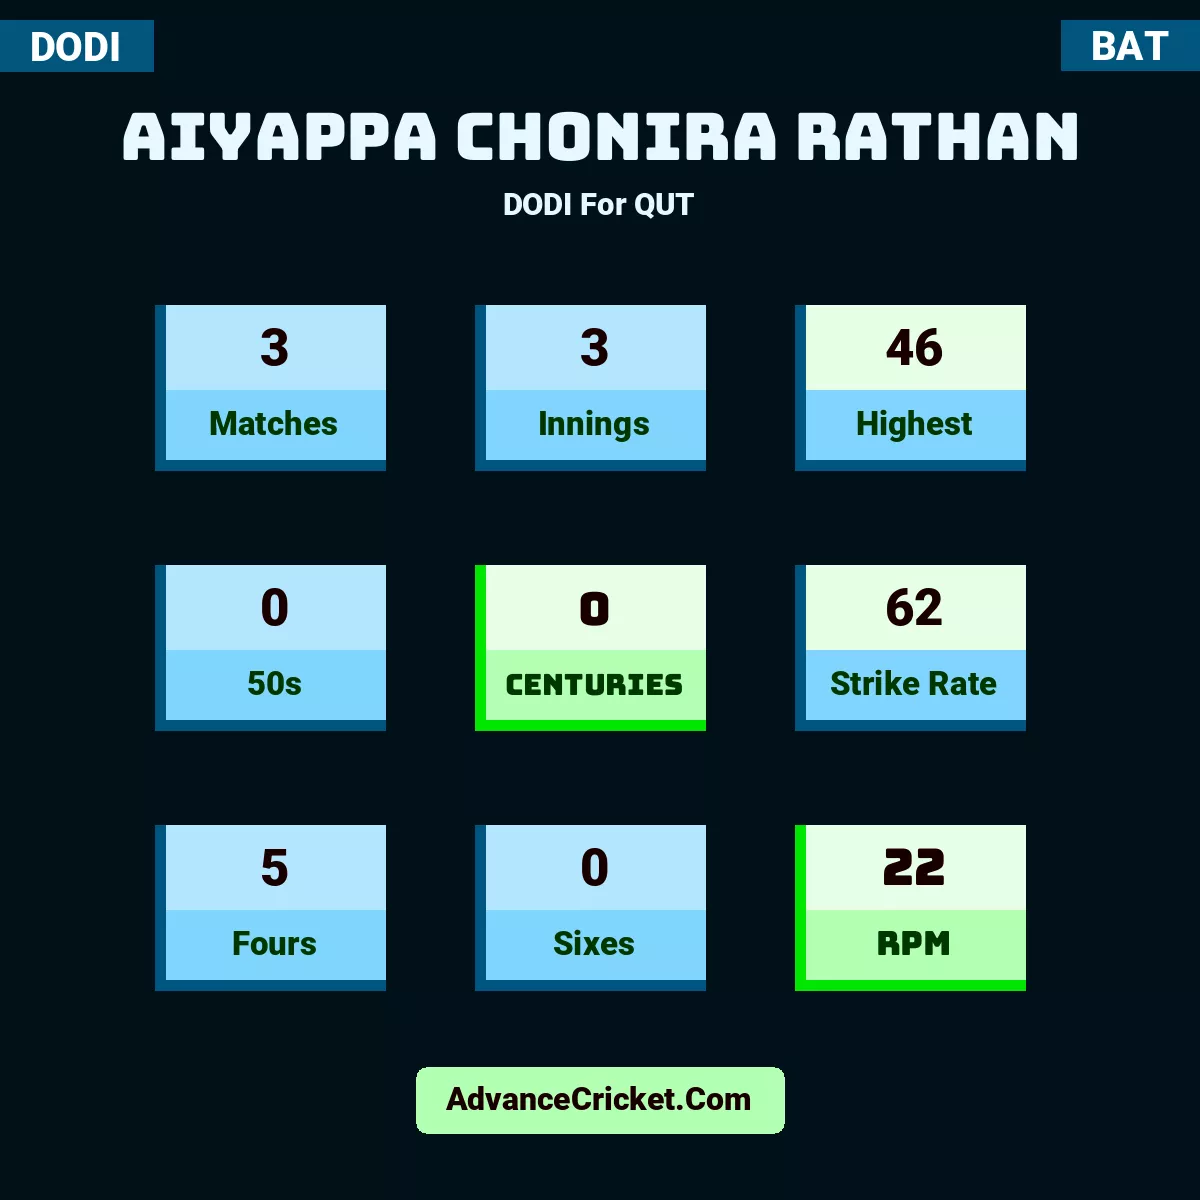 Aiyappa Chonira Rathan DODI  For QUT, Aiyappa Chonira Rathan played 3 matches, scored 46 runs as highest, 0 half-centuries, and 0 centuries, with a strike rate of 62. A.Chonira.Rathan hit 5 fours and 0 sixes, with an RPM of 22.